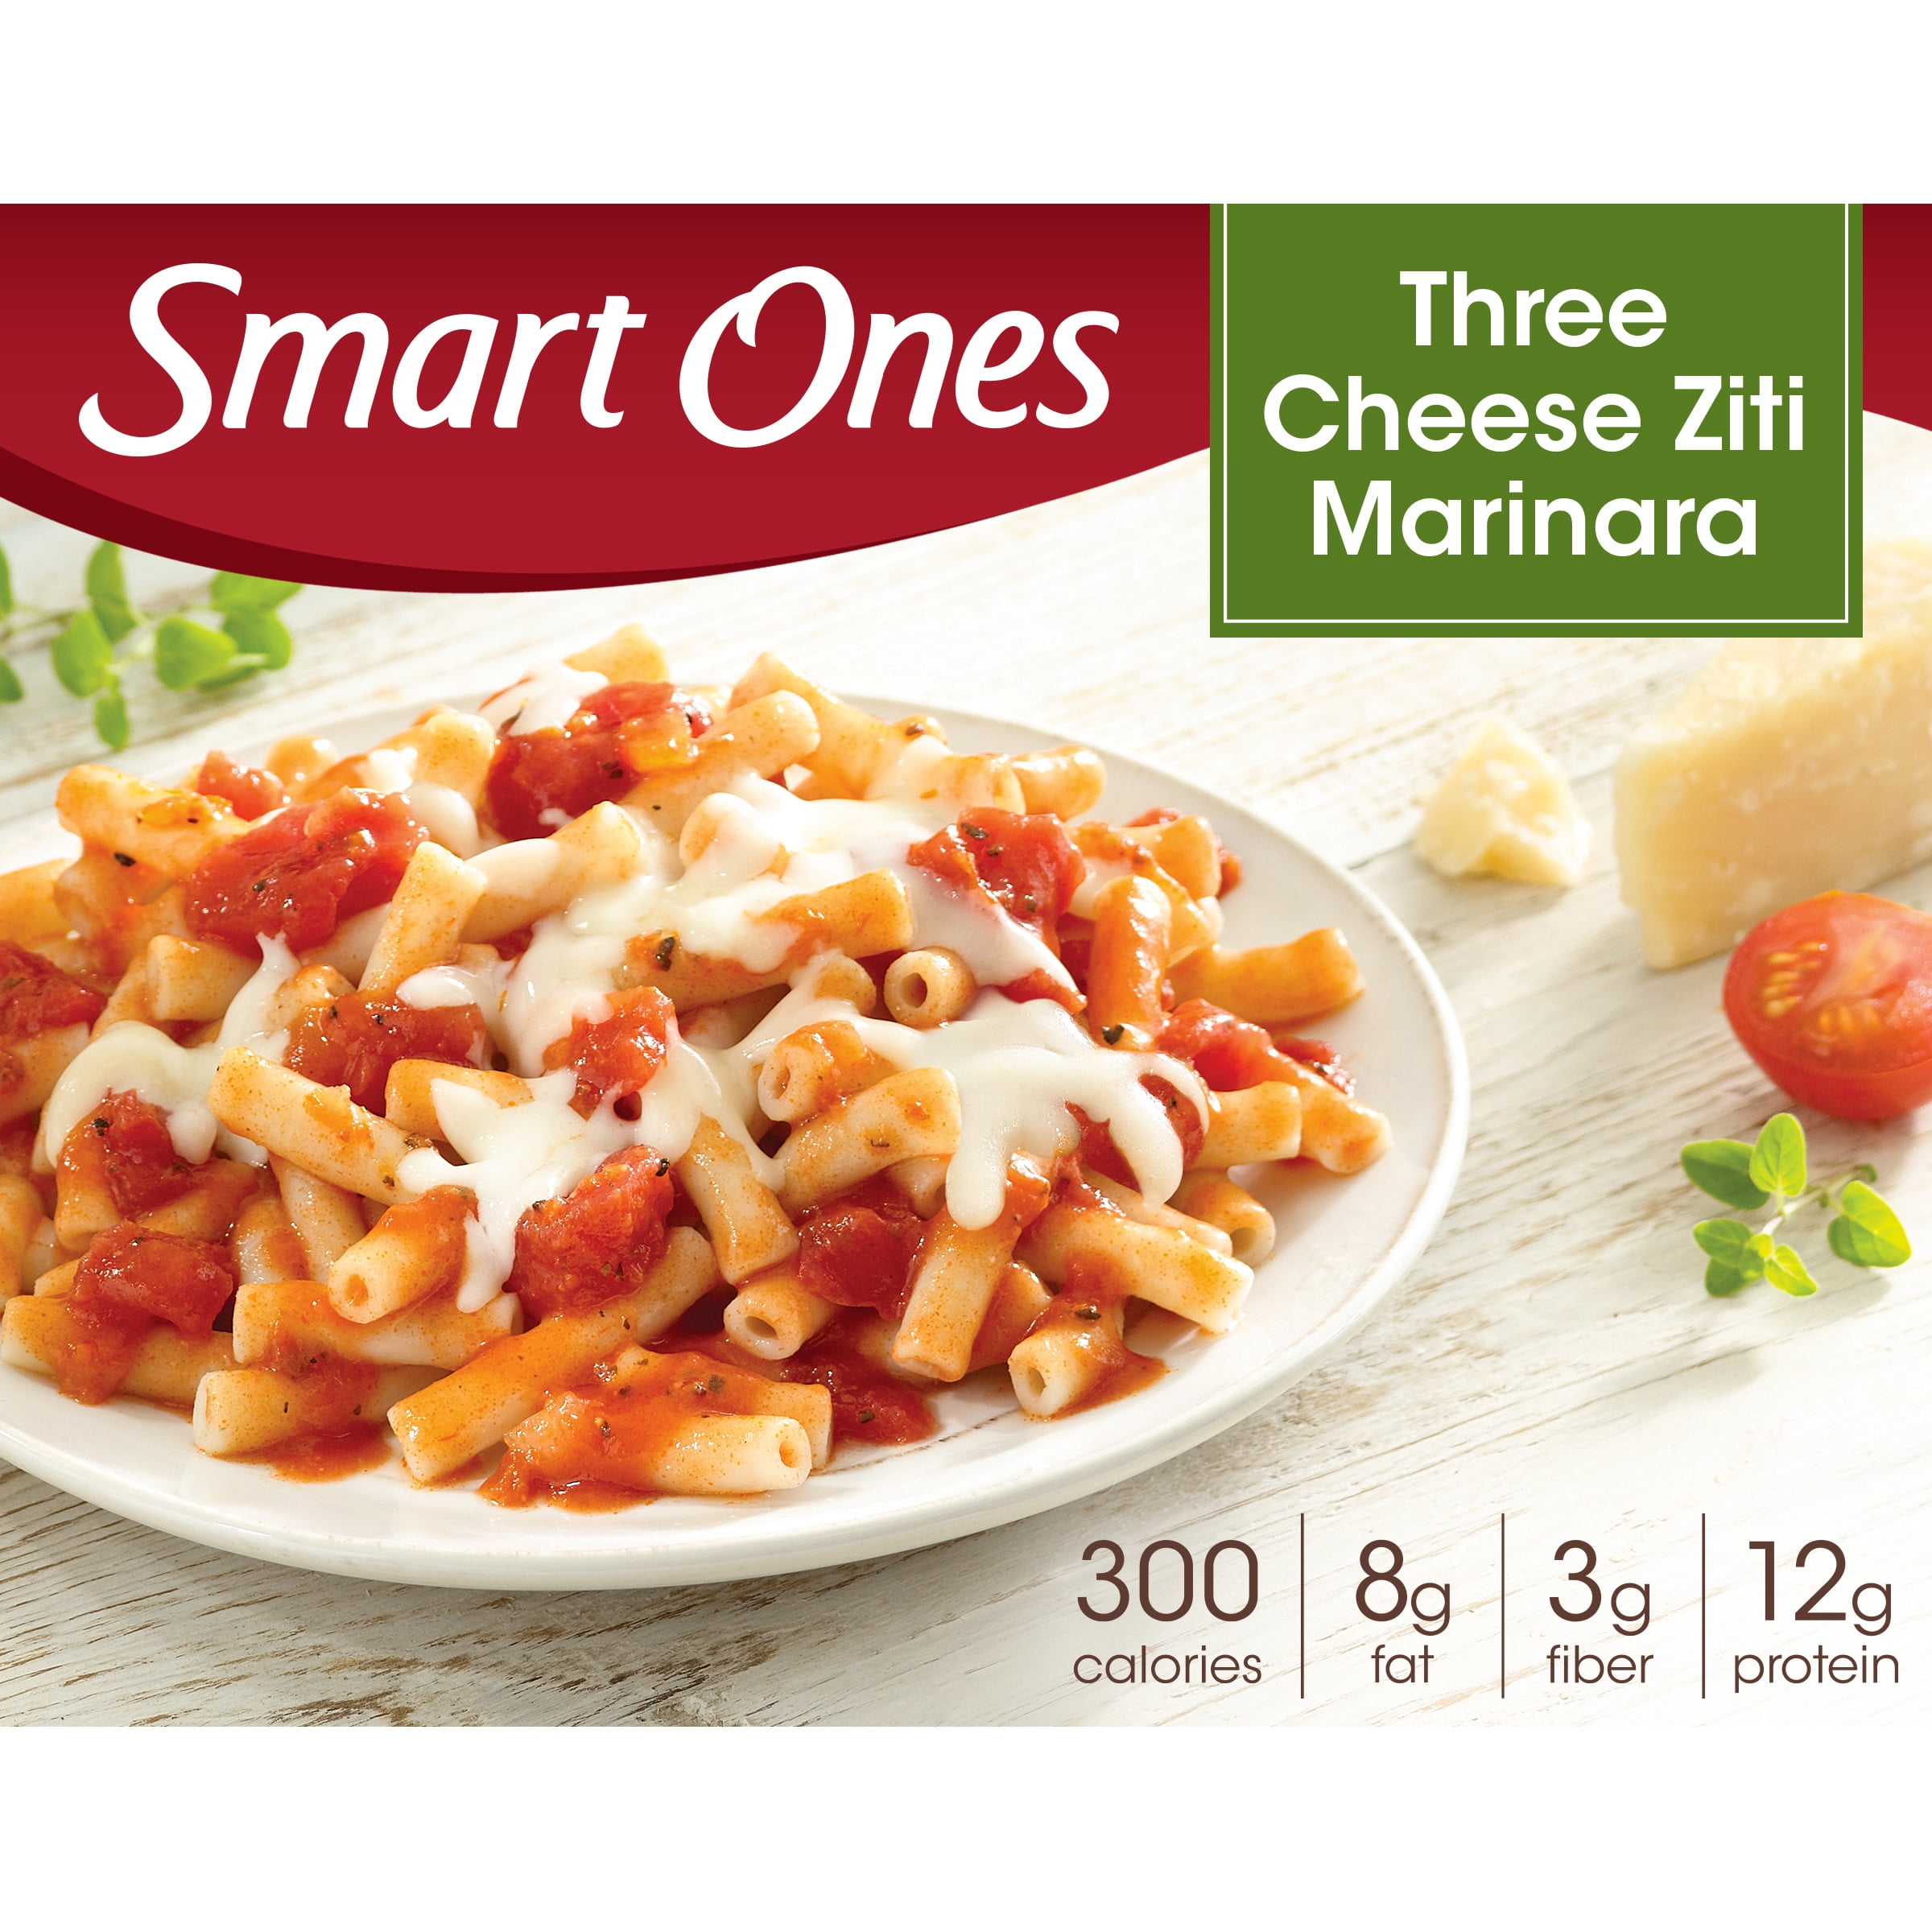 Smart Ones Three Cheese Ziti Marinara Frozen Meal, 9 Oz Box